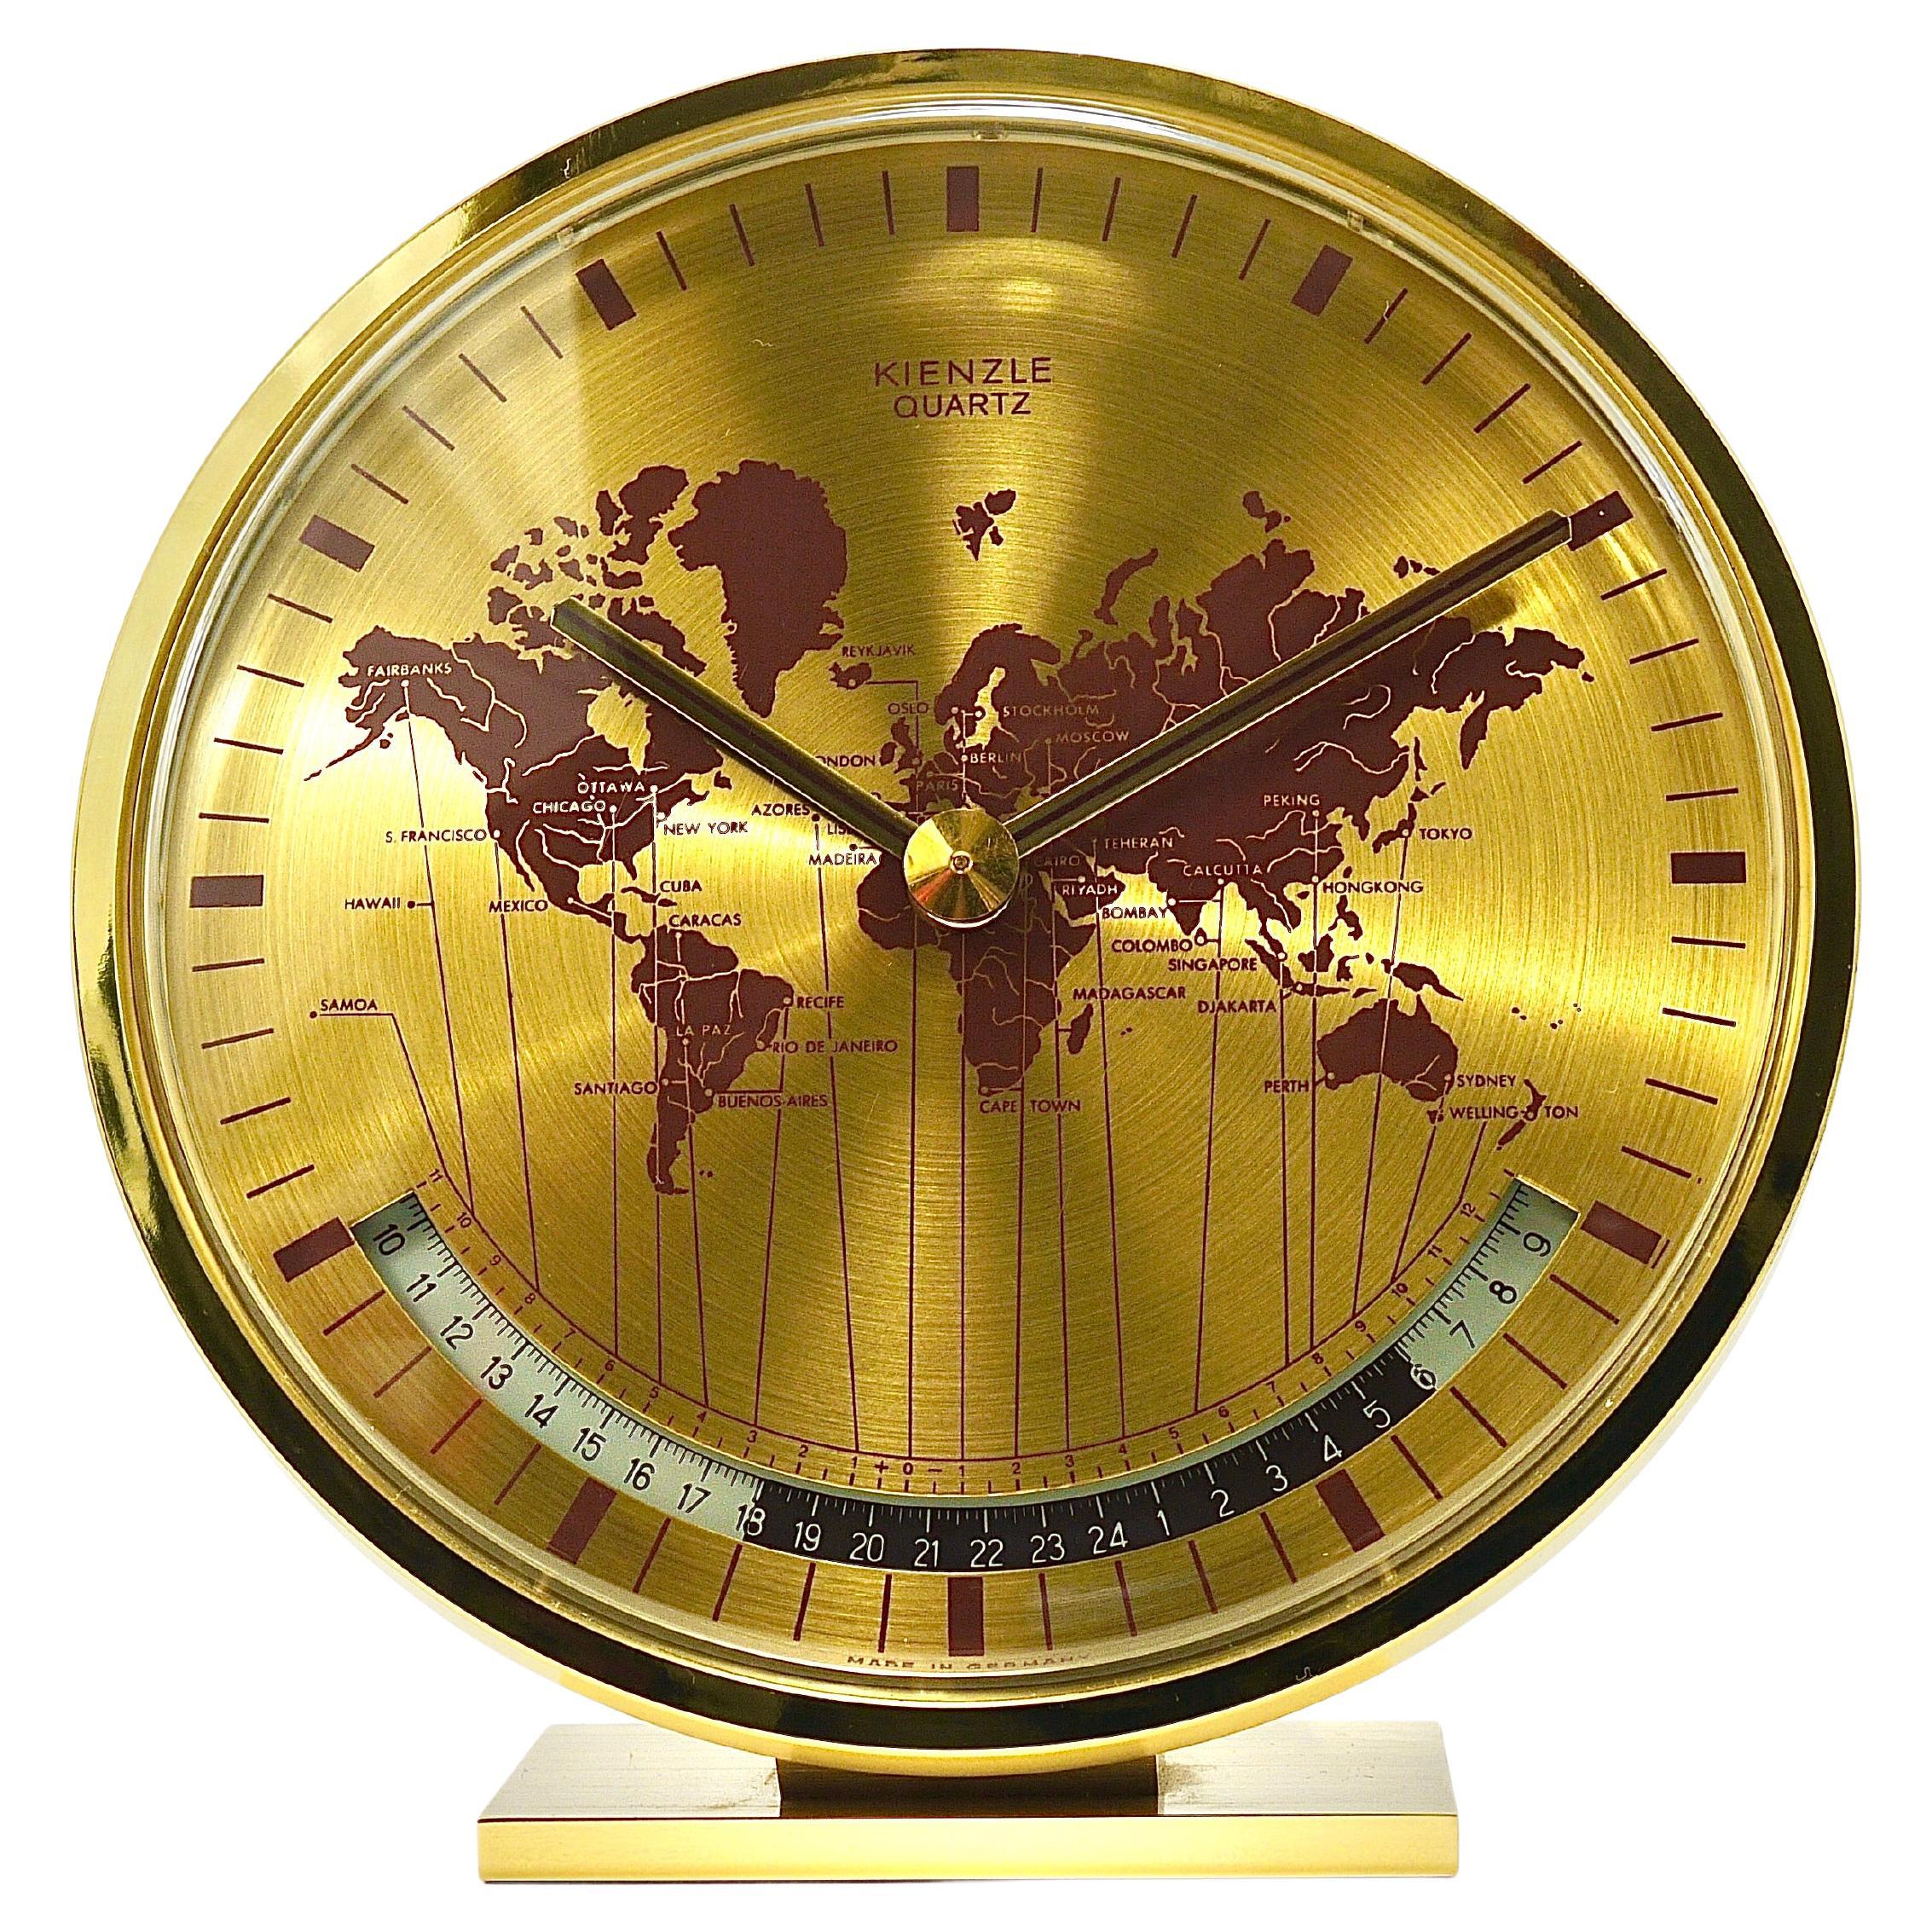 Kienzle World Time Clock - 7 For Sale on 1stDibs